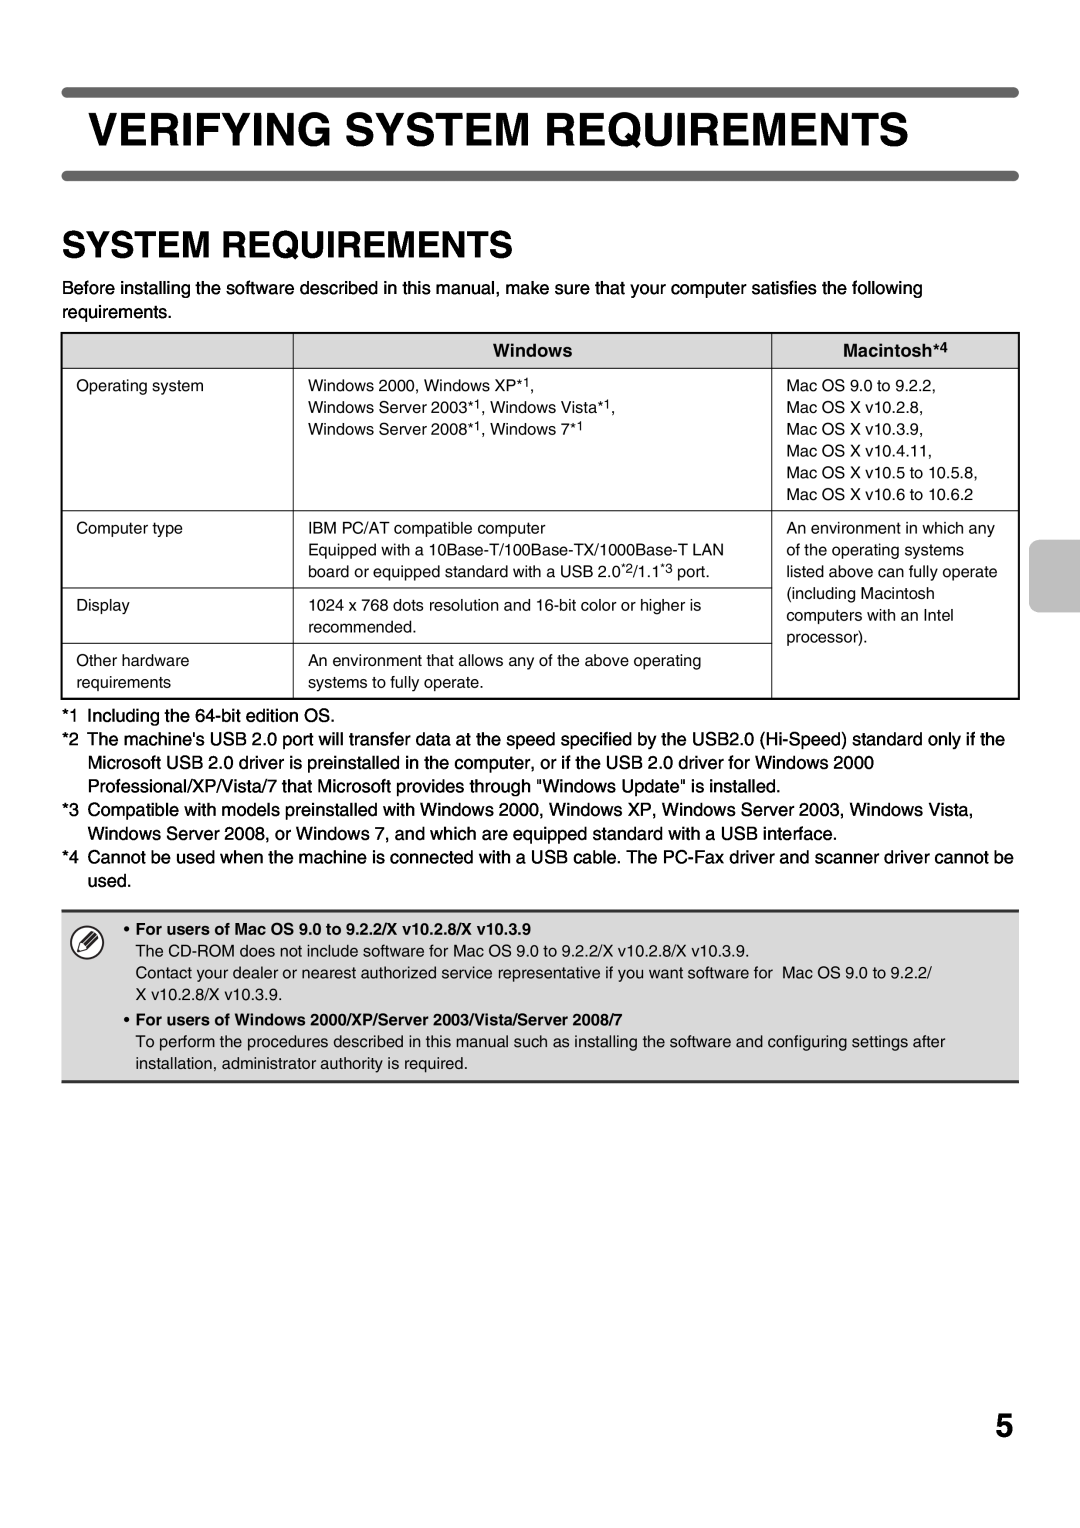 Sharp MX-2010U, MX-2310U setup guide Verifying System Requirements, Windows, Macintosh*4 